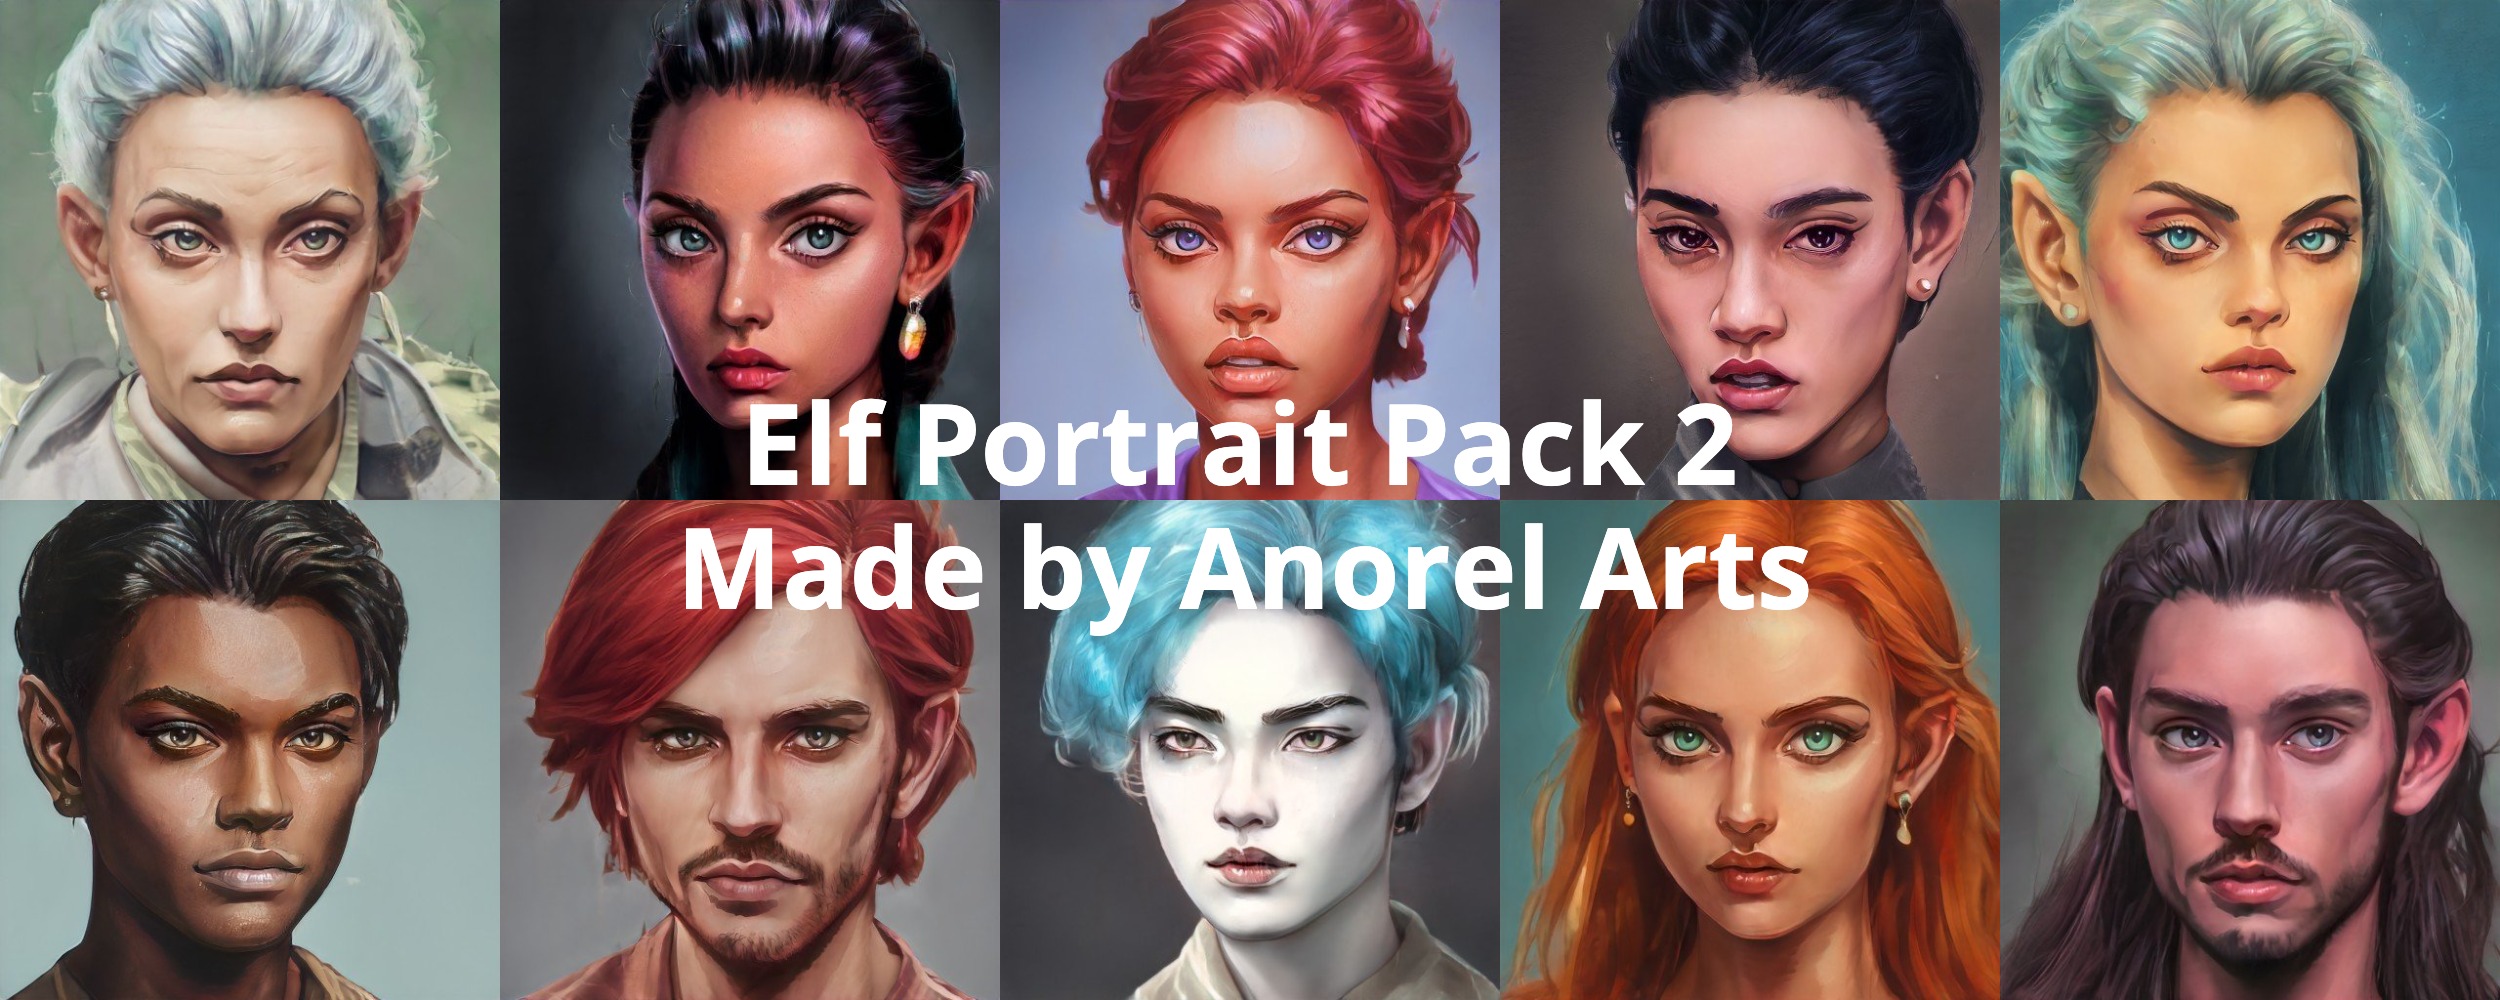 Elf Portrait Pack 2